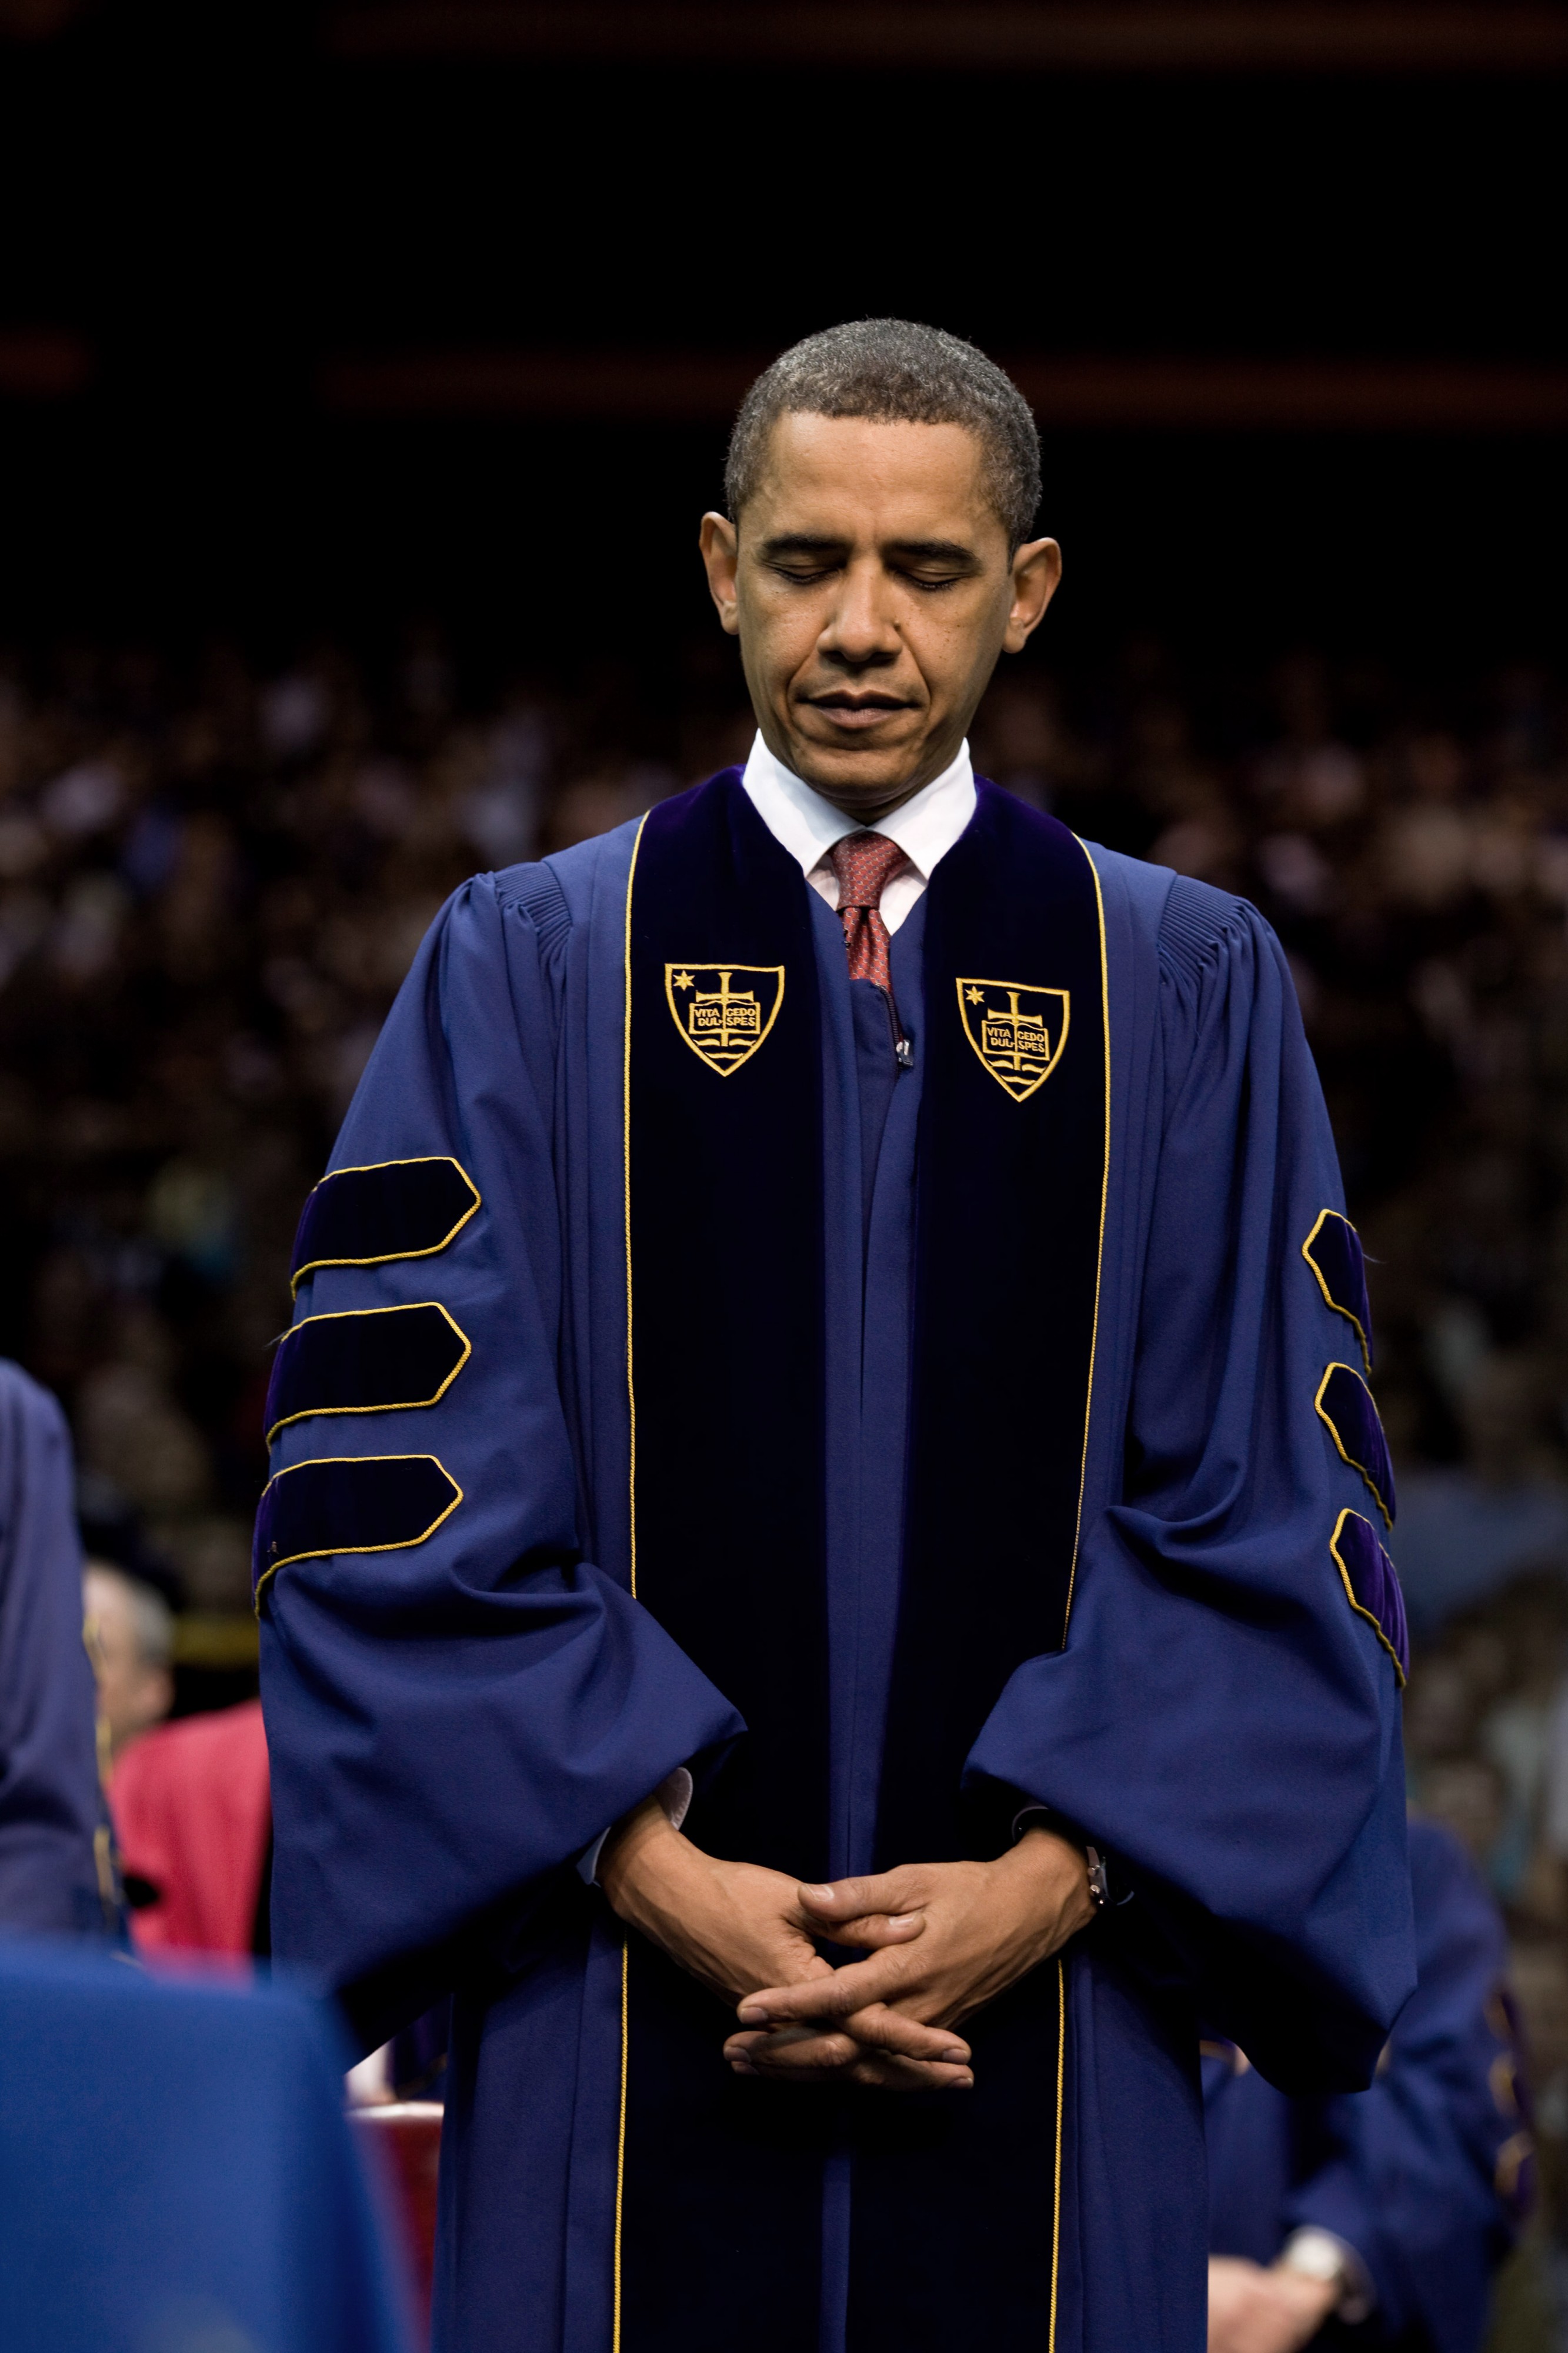 President Barack Obama at Notre Dame University 05-17-09